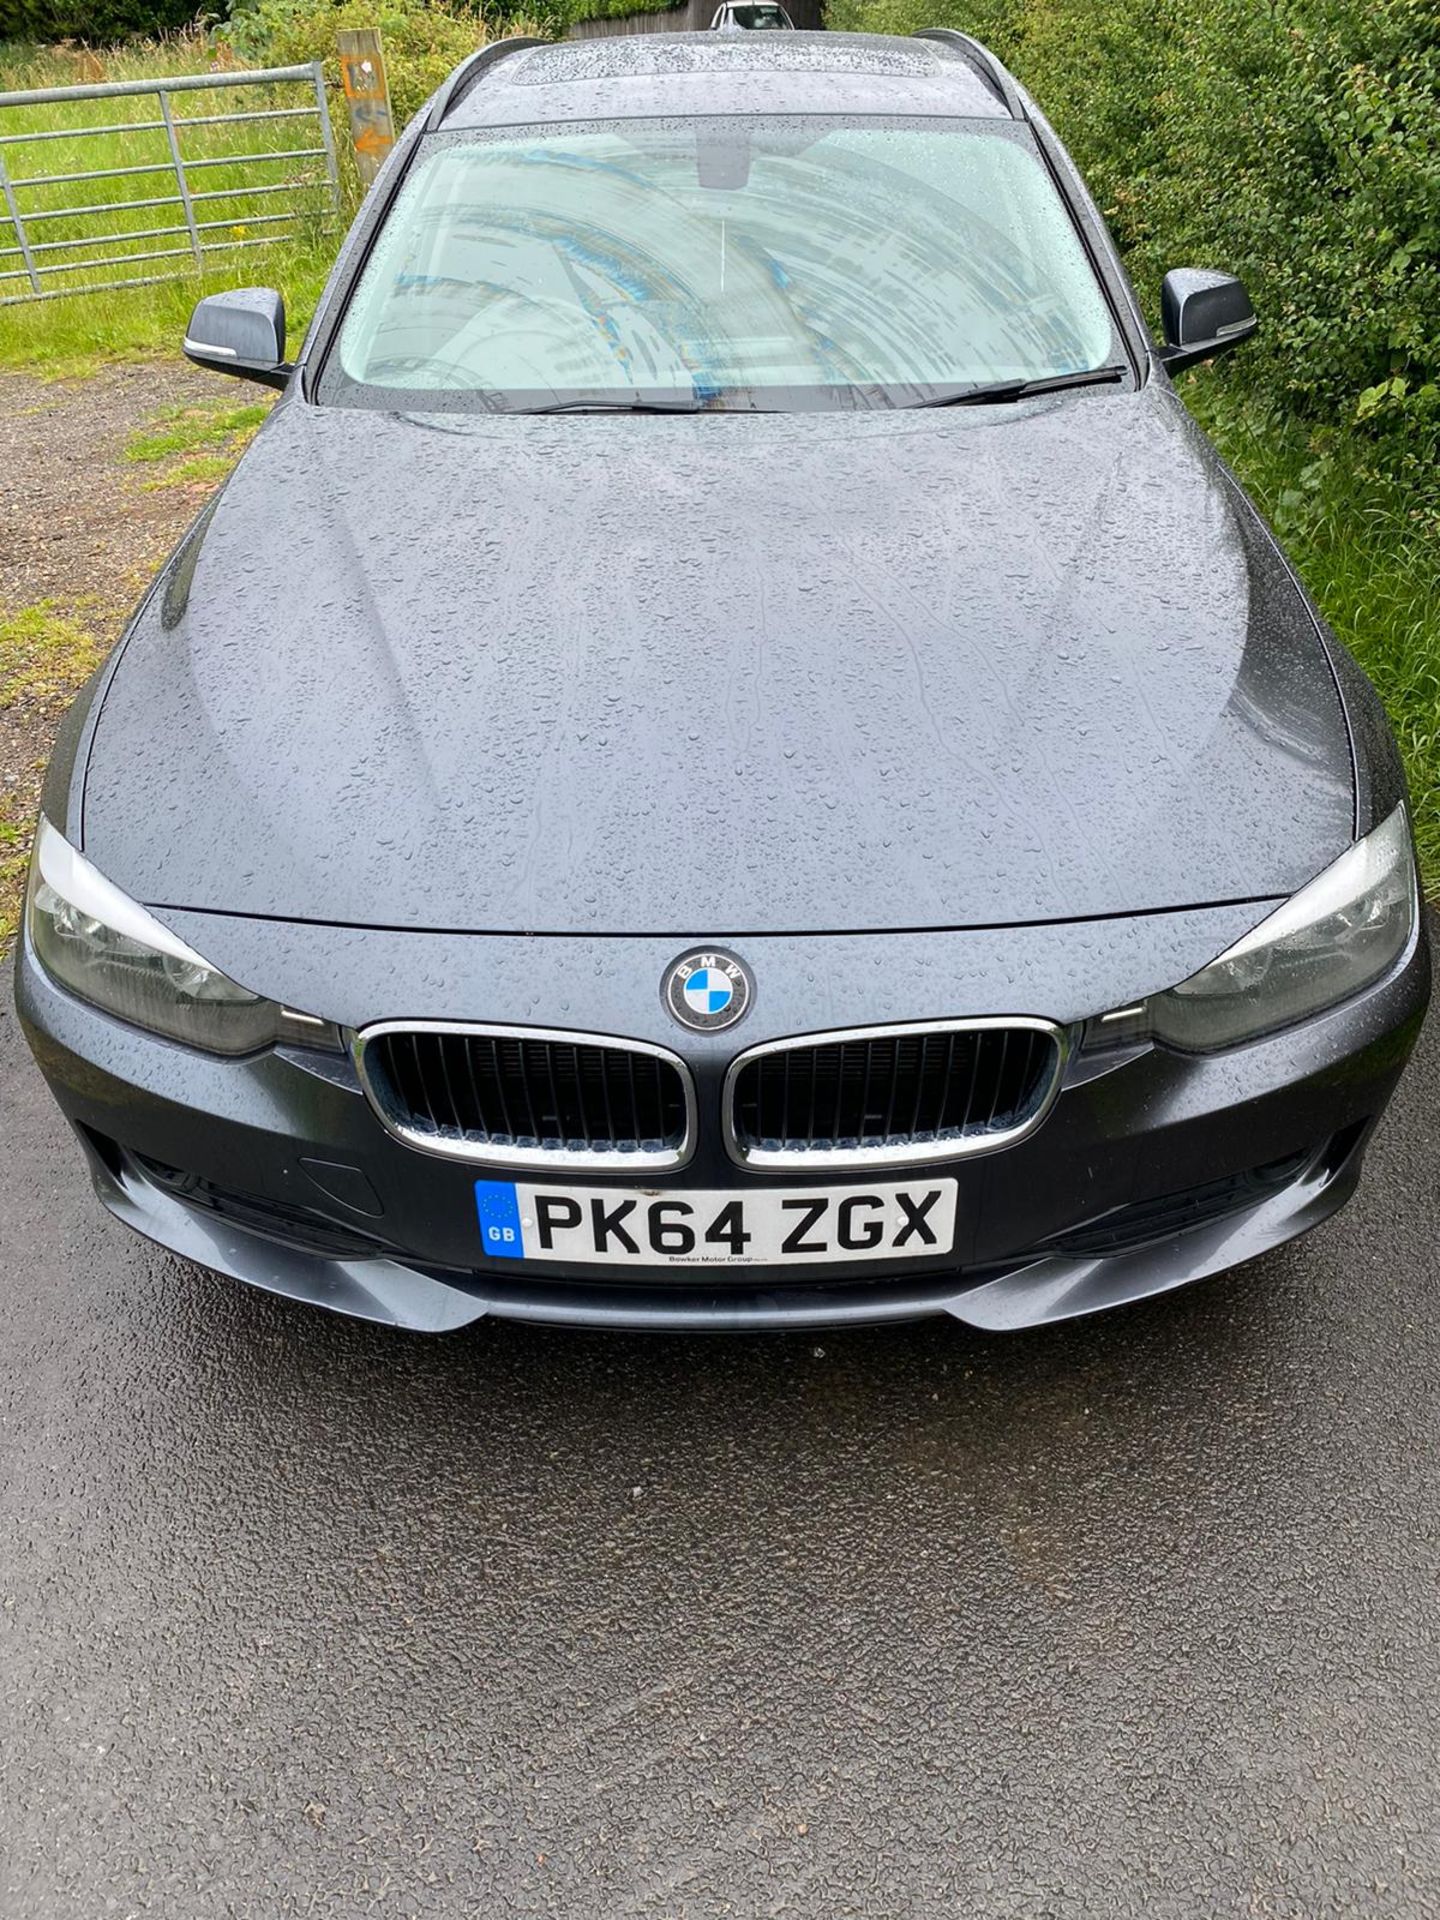 BMW 320D Touring Estate - Image 6 of 14